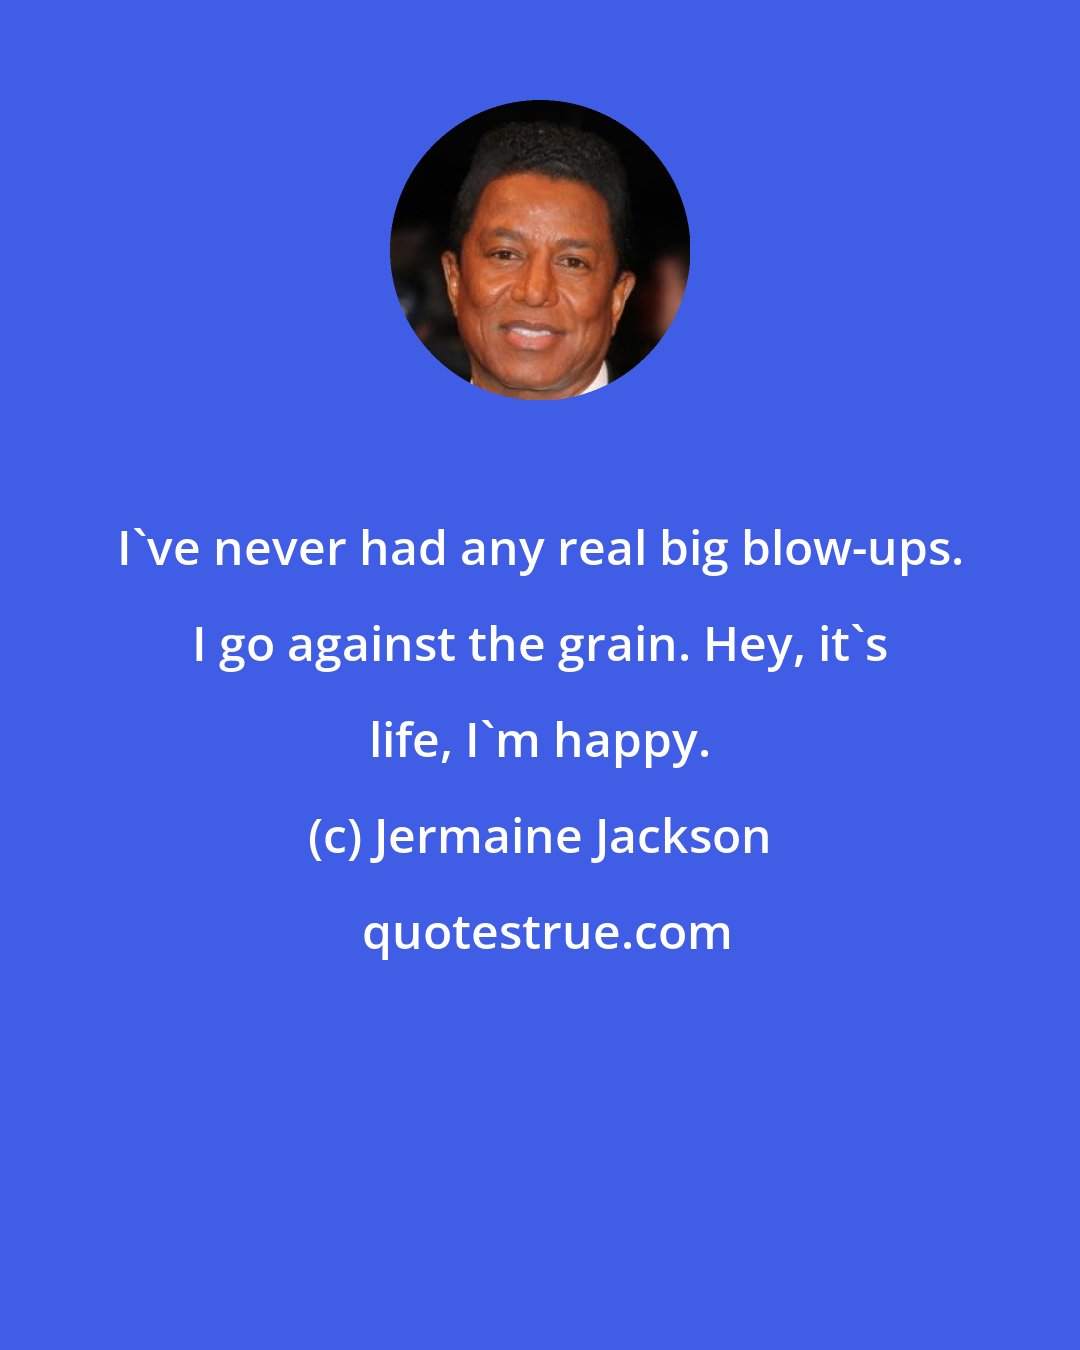 Jermaine Jackson: I've never had any real big blow-ups. I go against the grain. Hey, it's life, I'm happy.